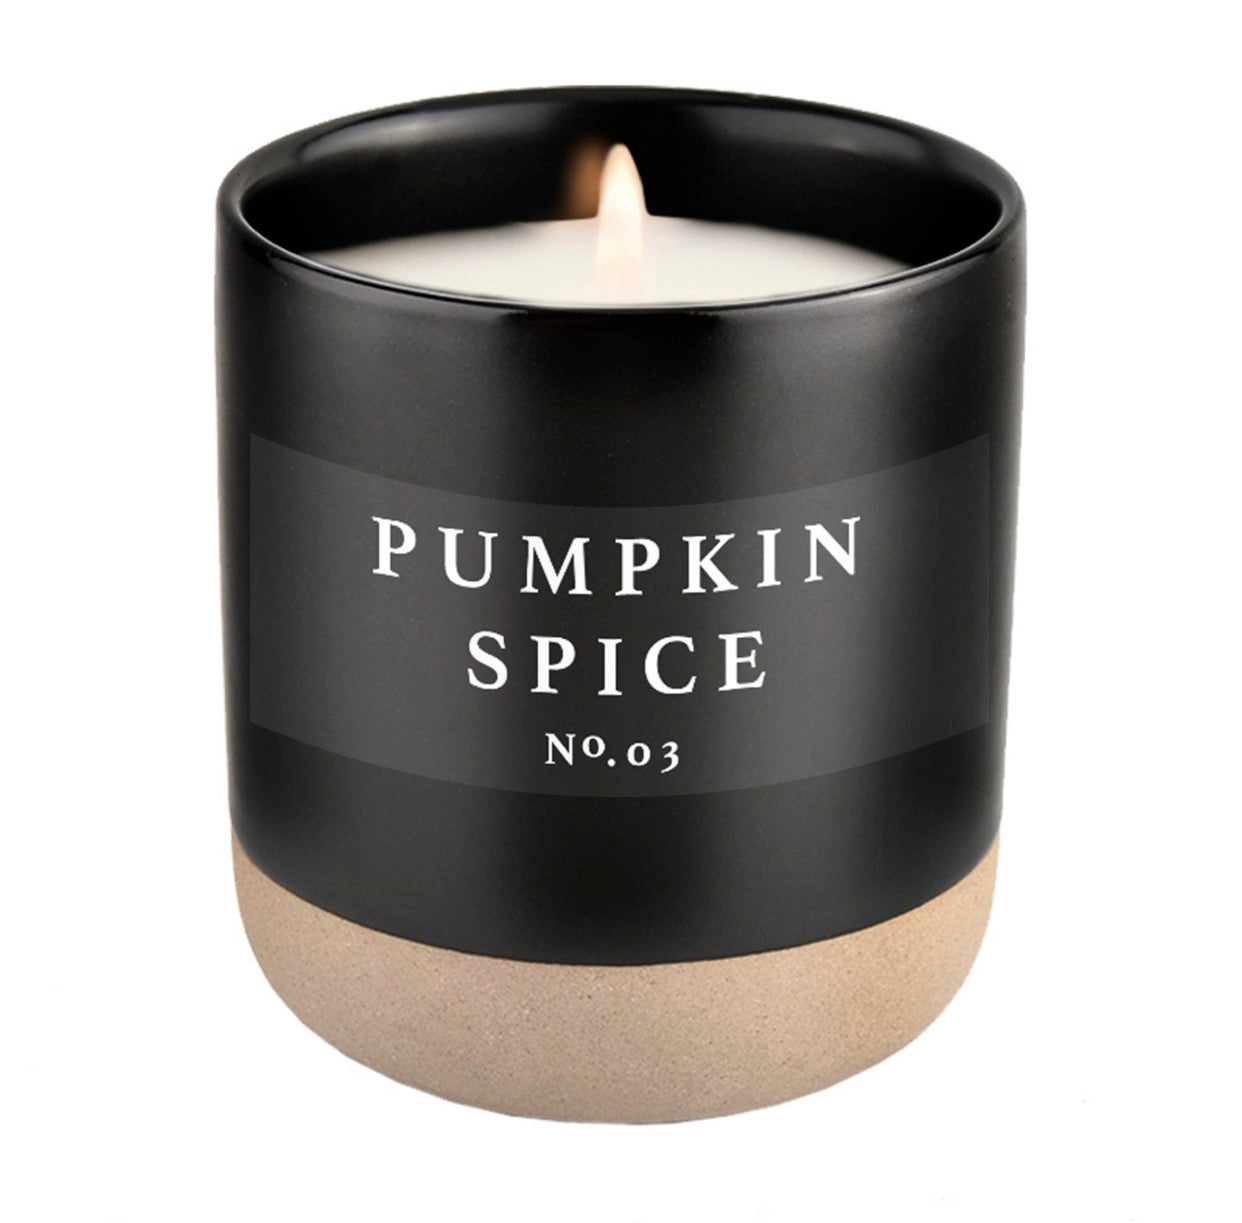 Pumpkin Spice Black Stoneware Jar Candle, 12 oz. Soy